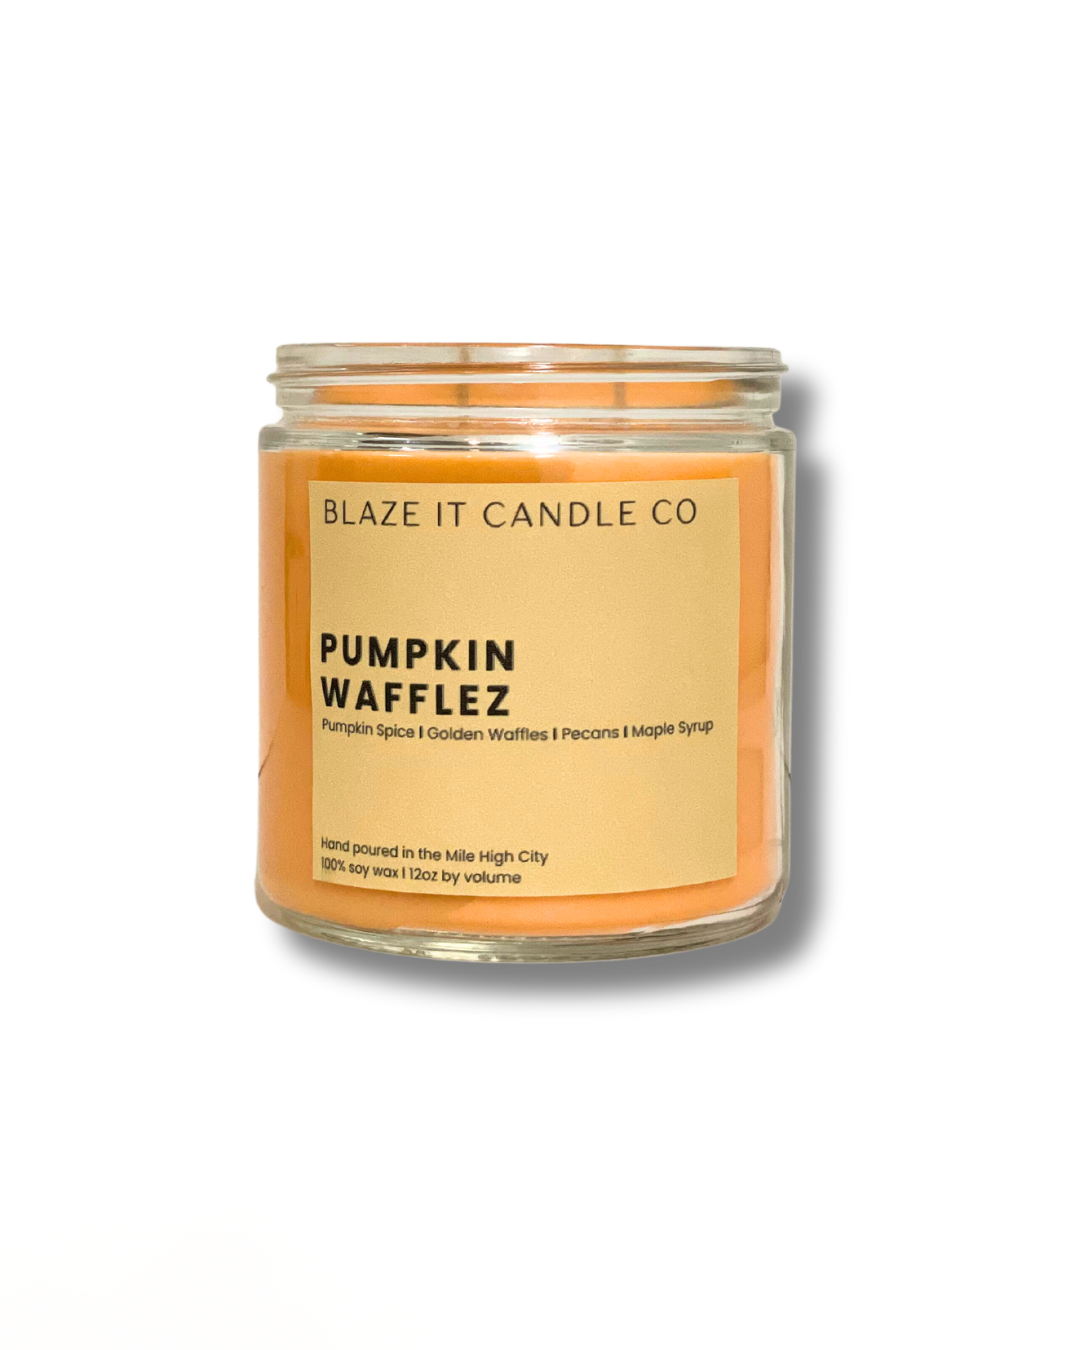 Pumpkin Wafflez candle - Blaze It Candle Co